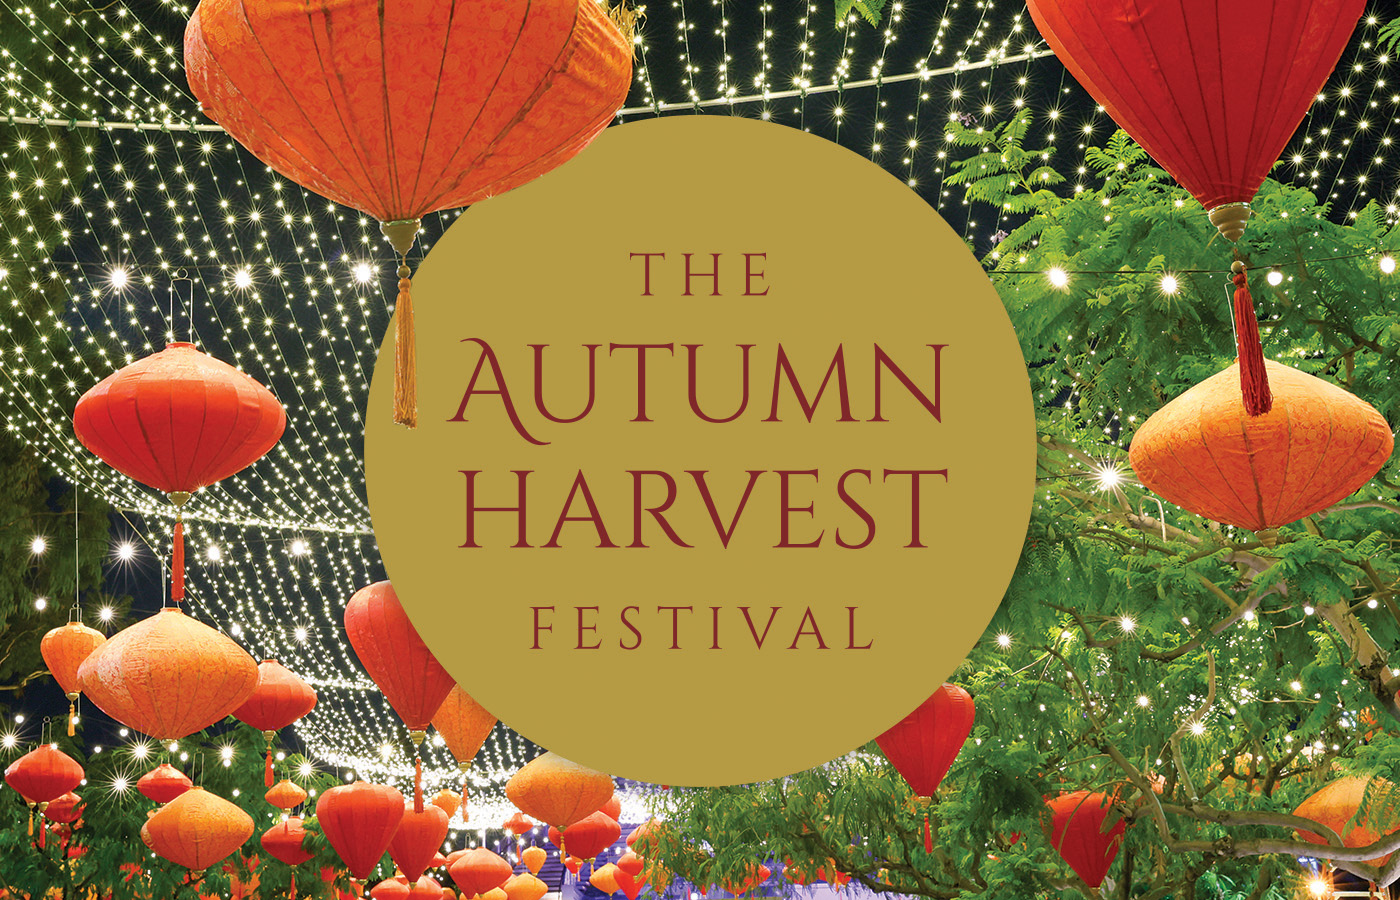 The Autumn Harvest Festival